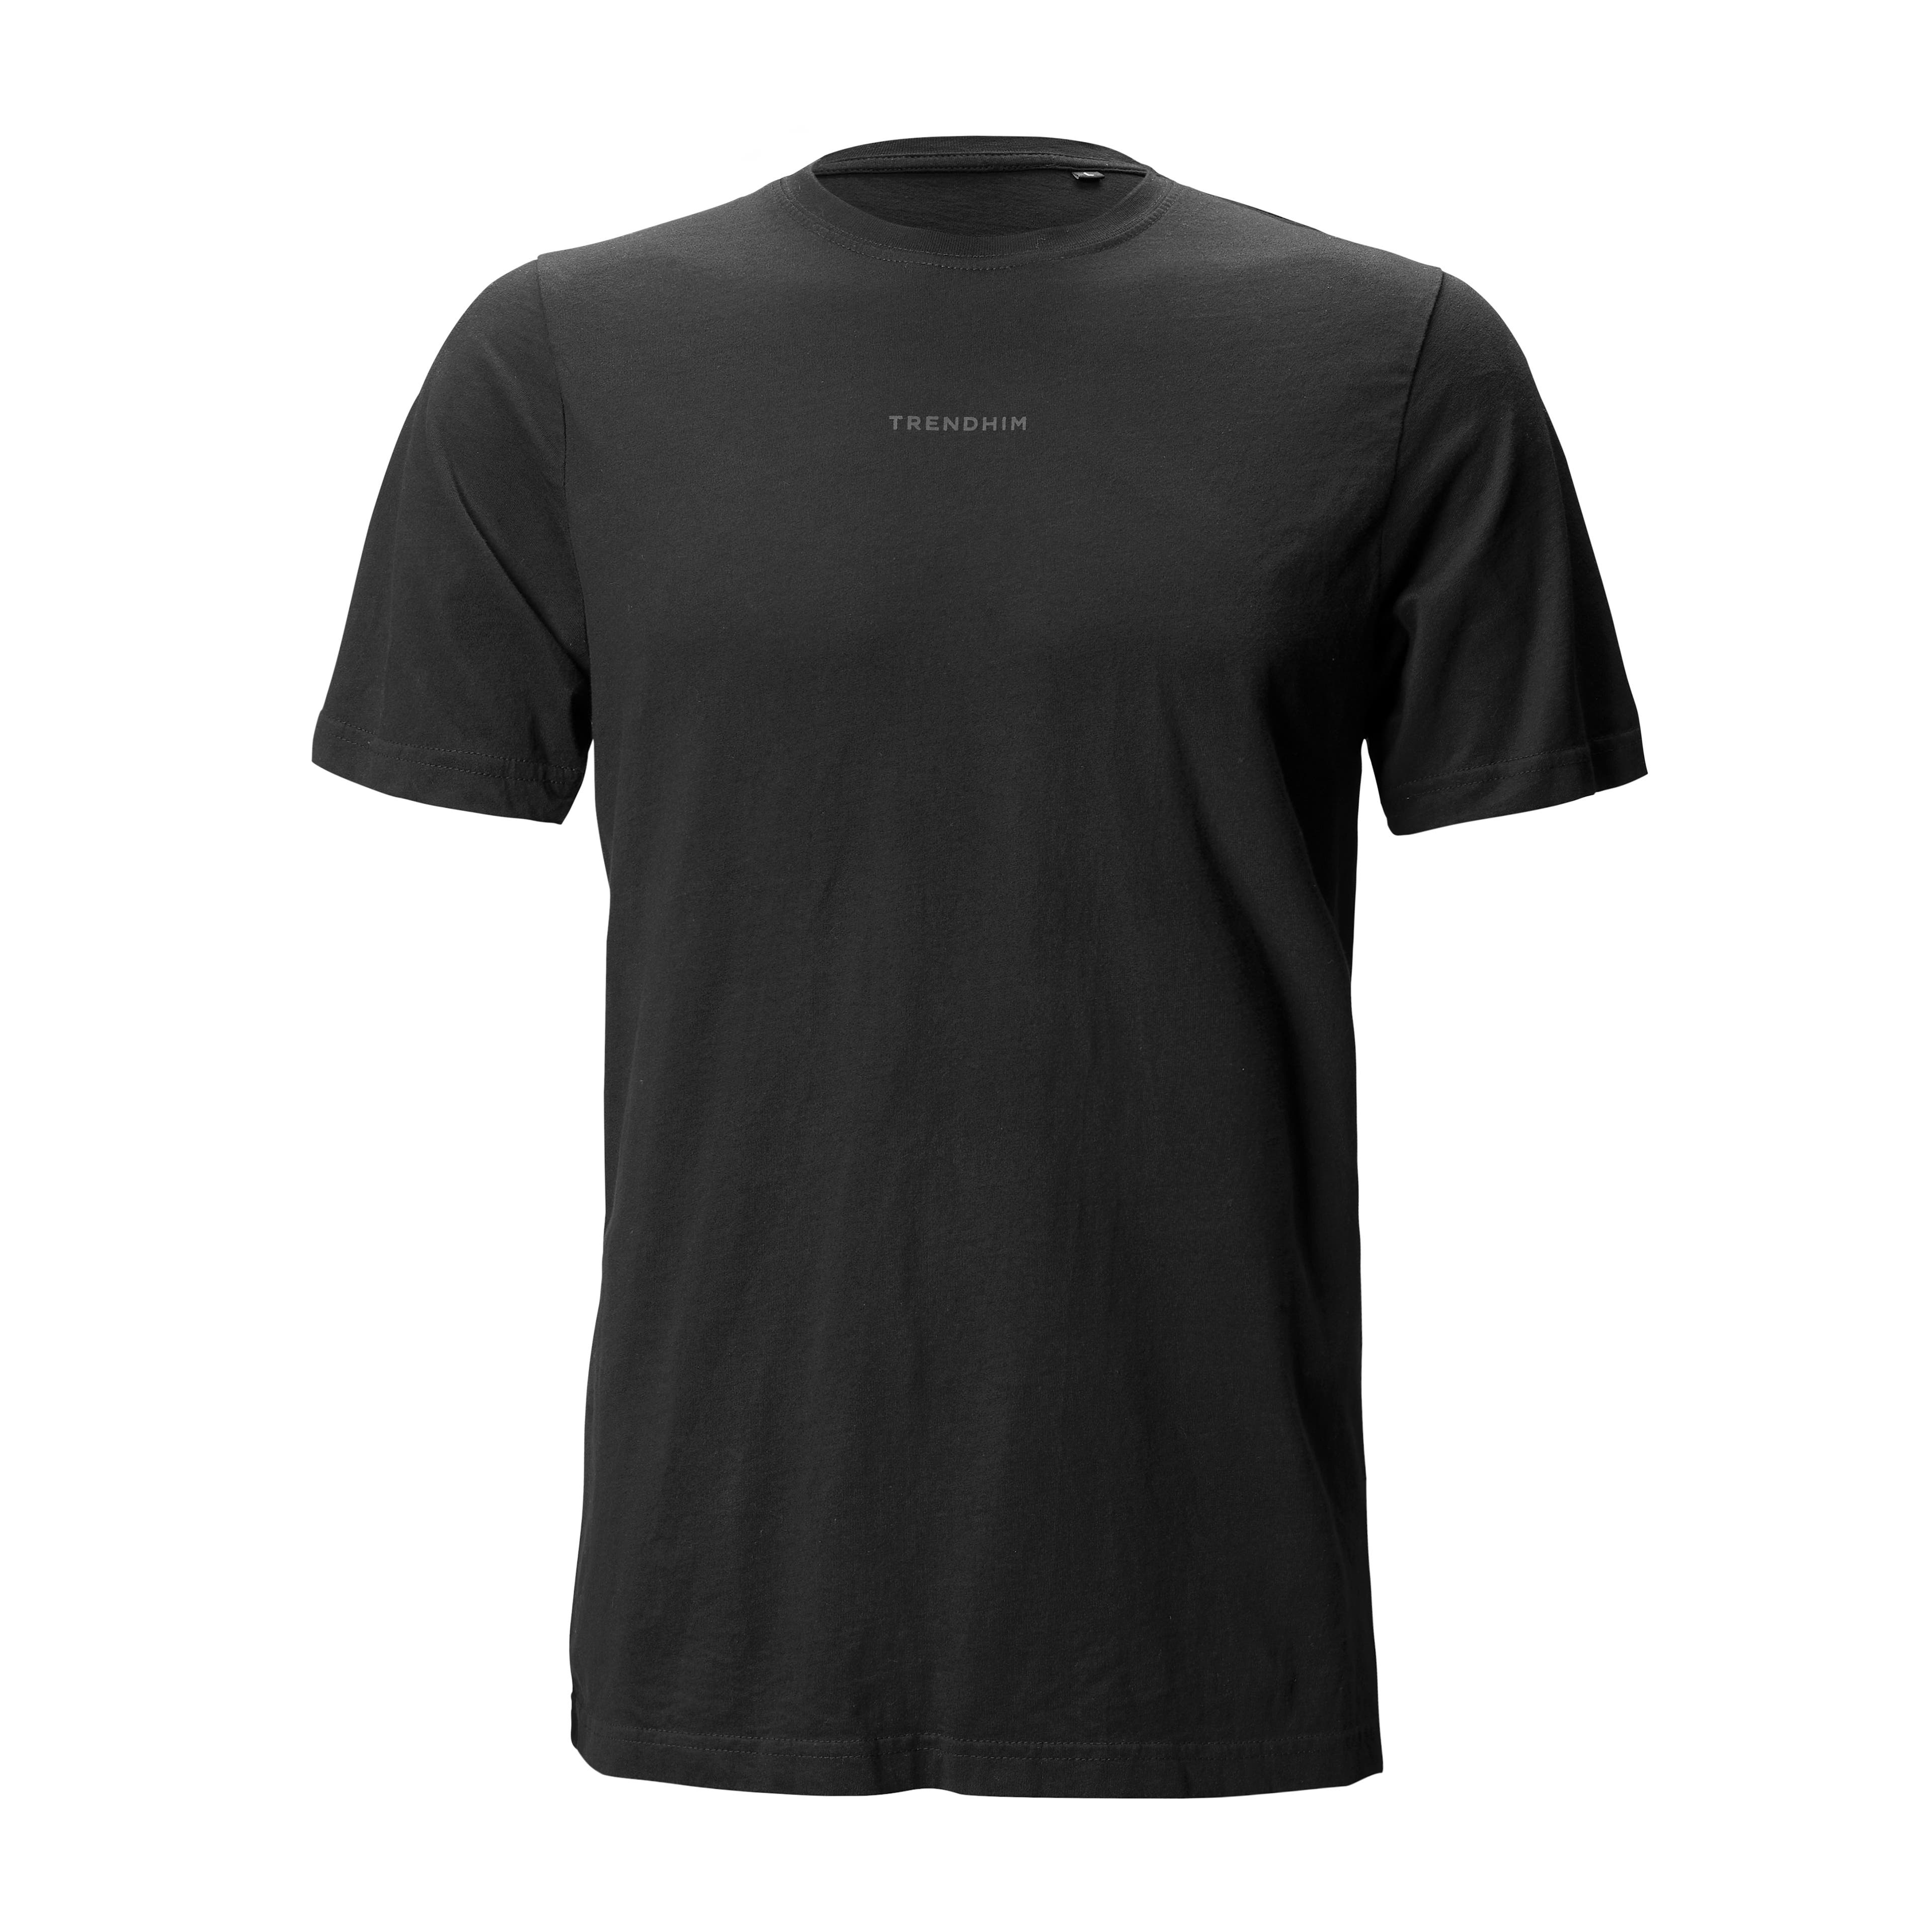 Black-on-black Cotton T-shirt